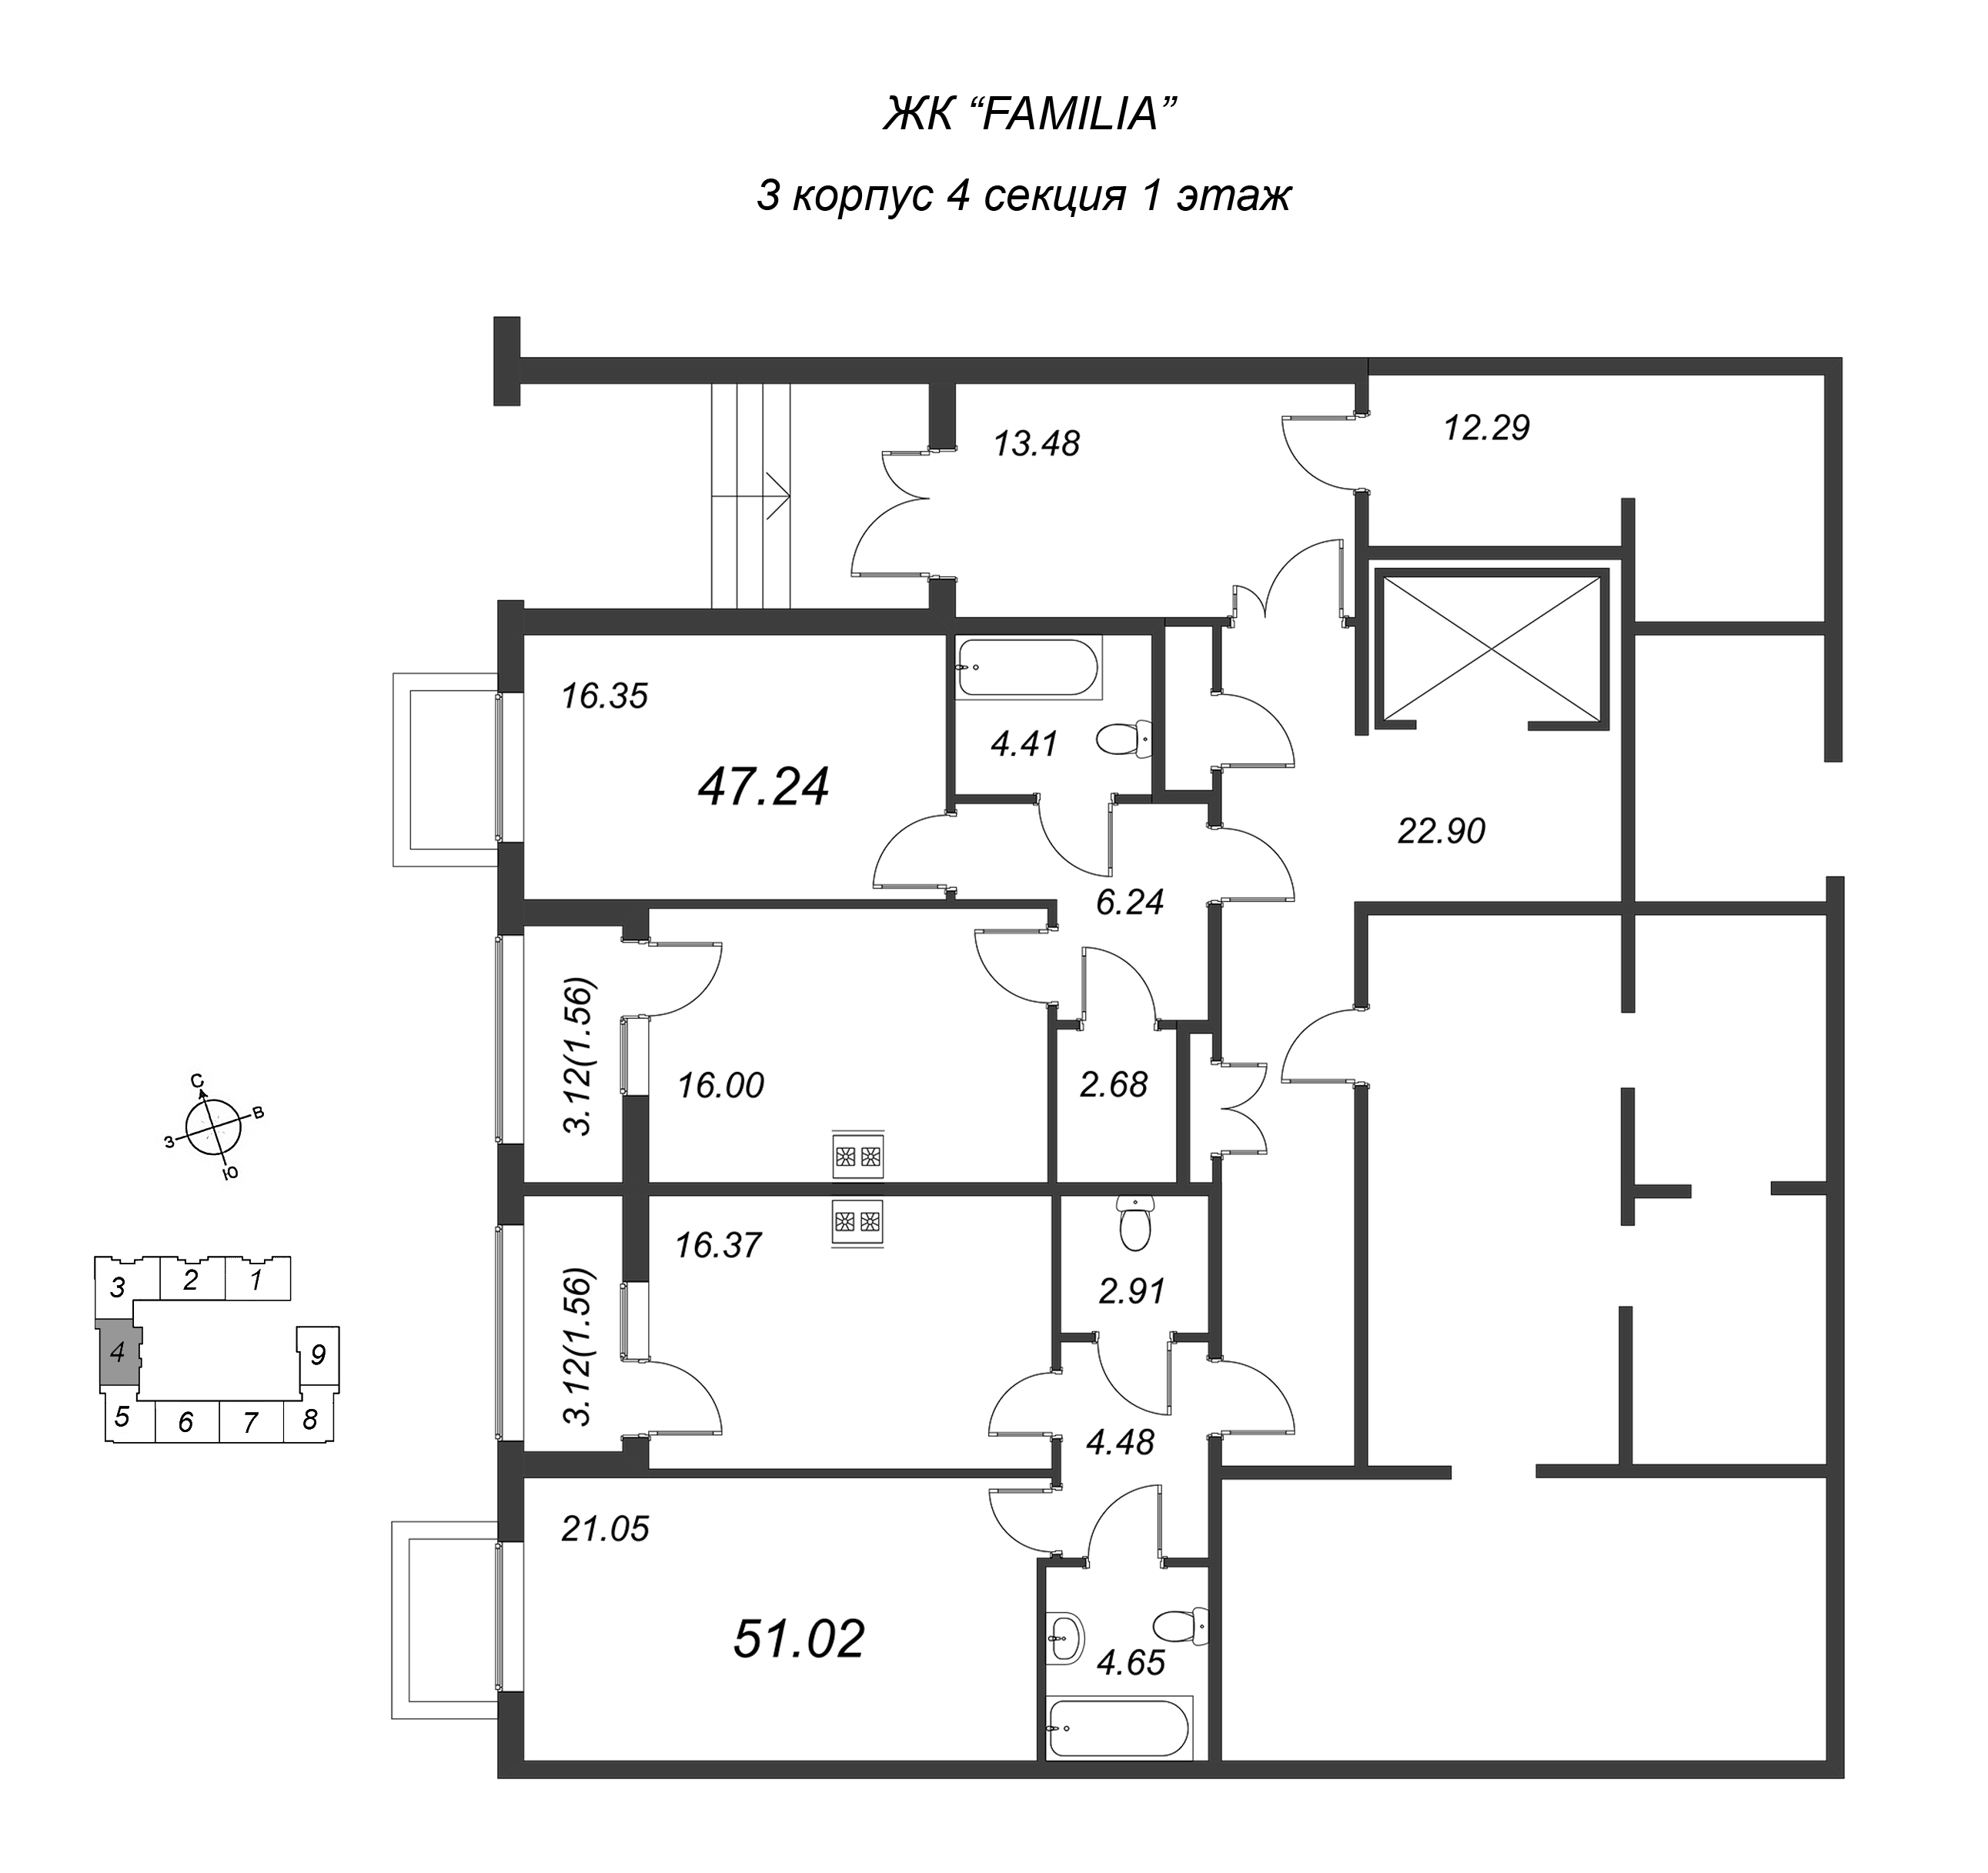 1-комнатная квартира, 47.5 м² в ЖК "FAMILIA" - планировка этажа